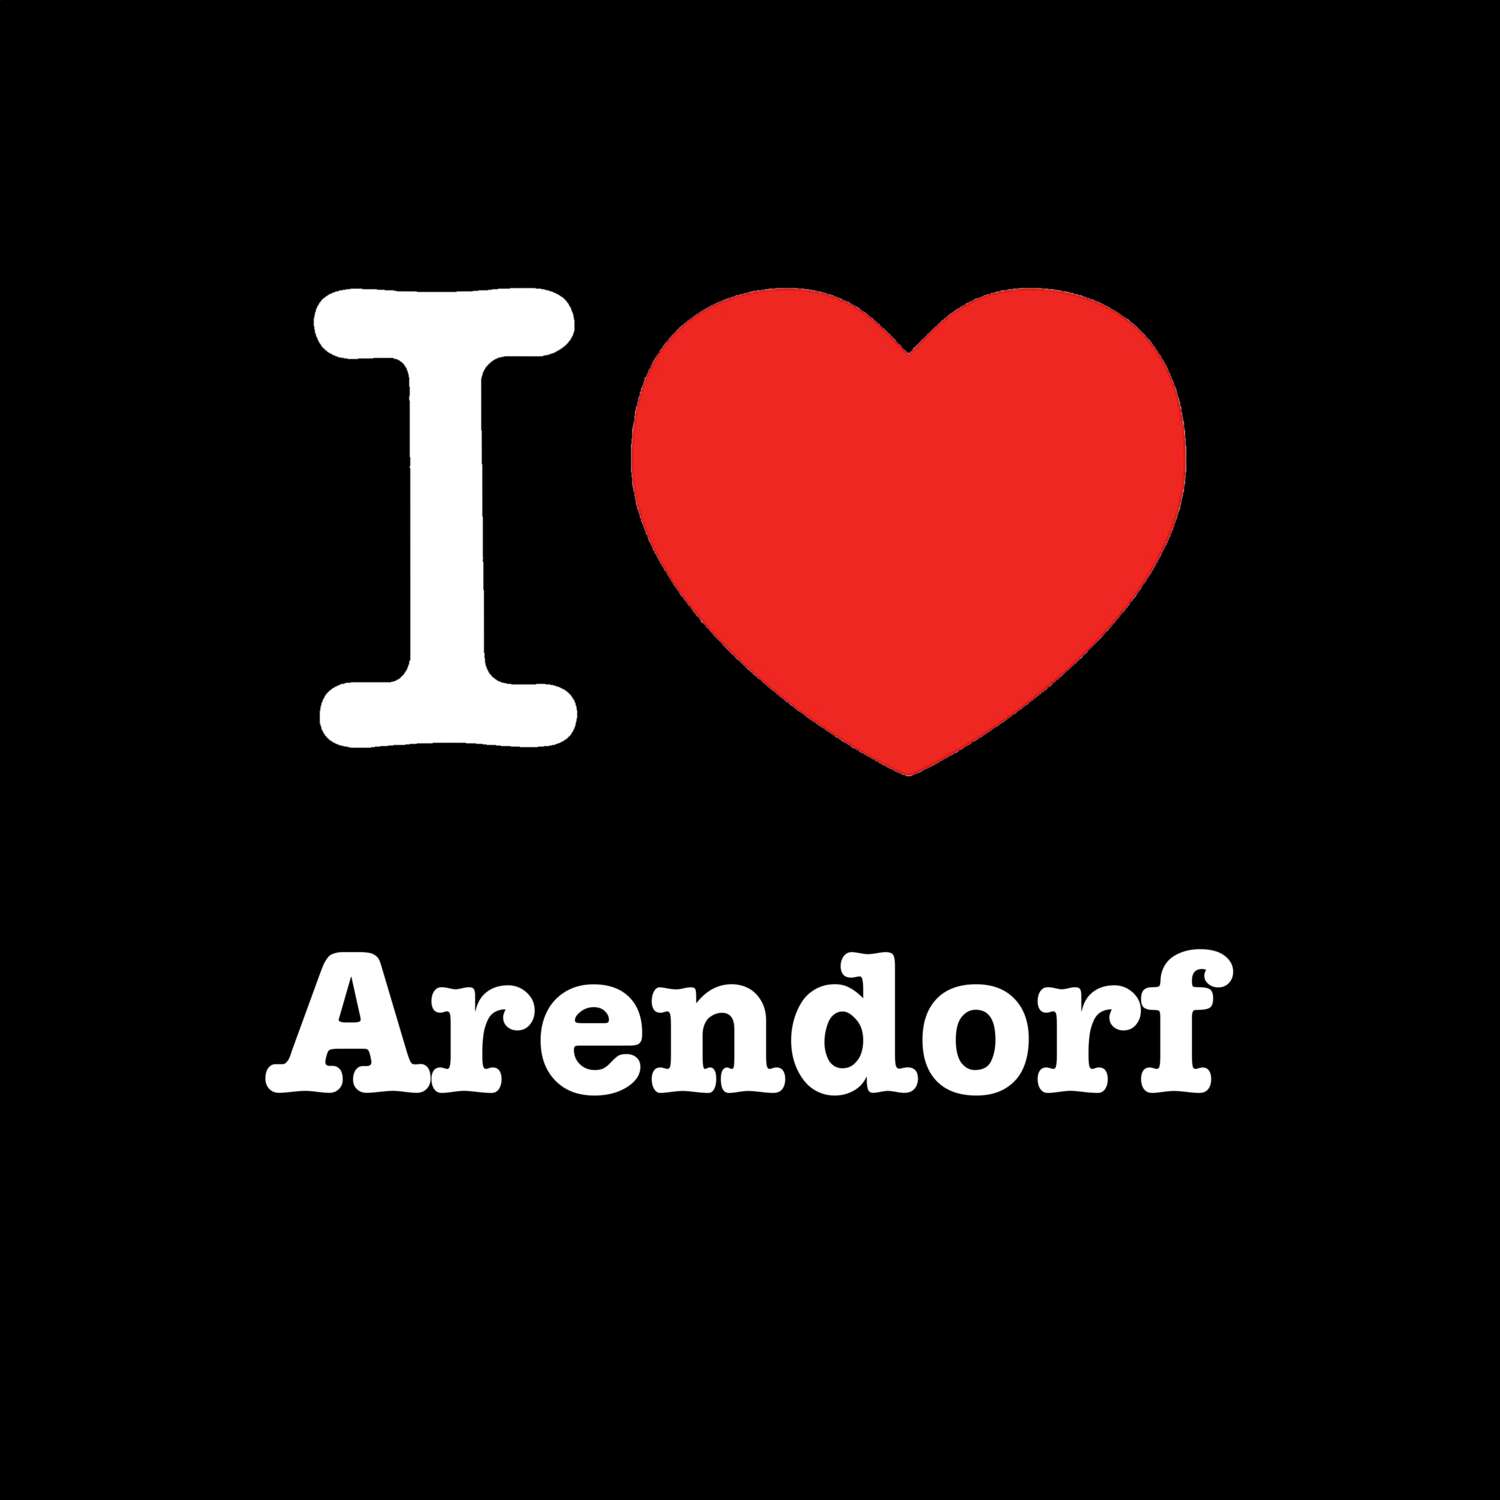 Arendorf T-Shirt »I love«